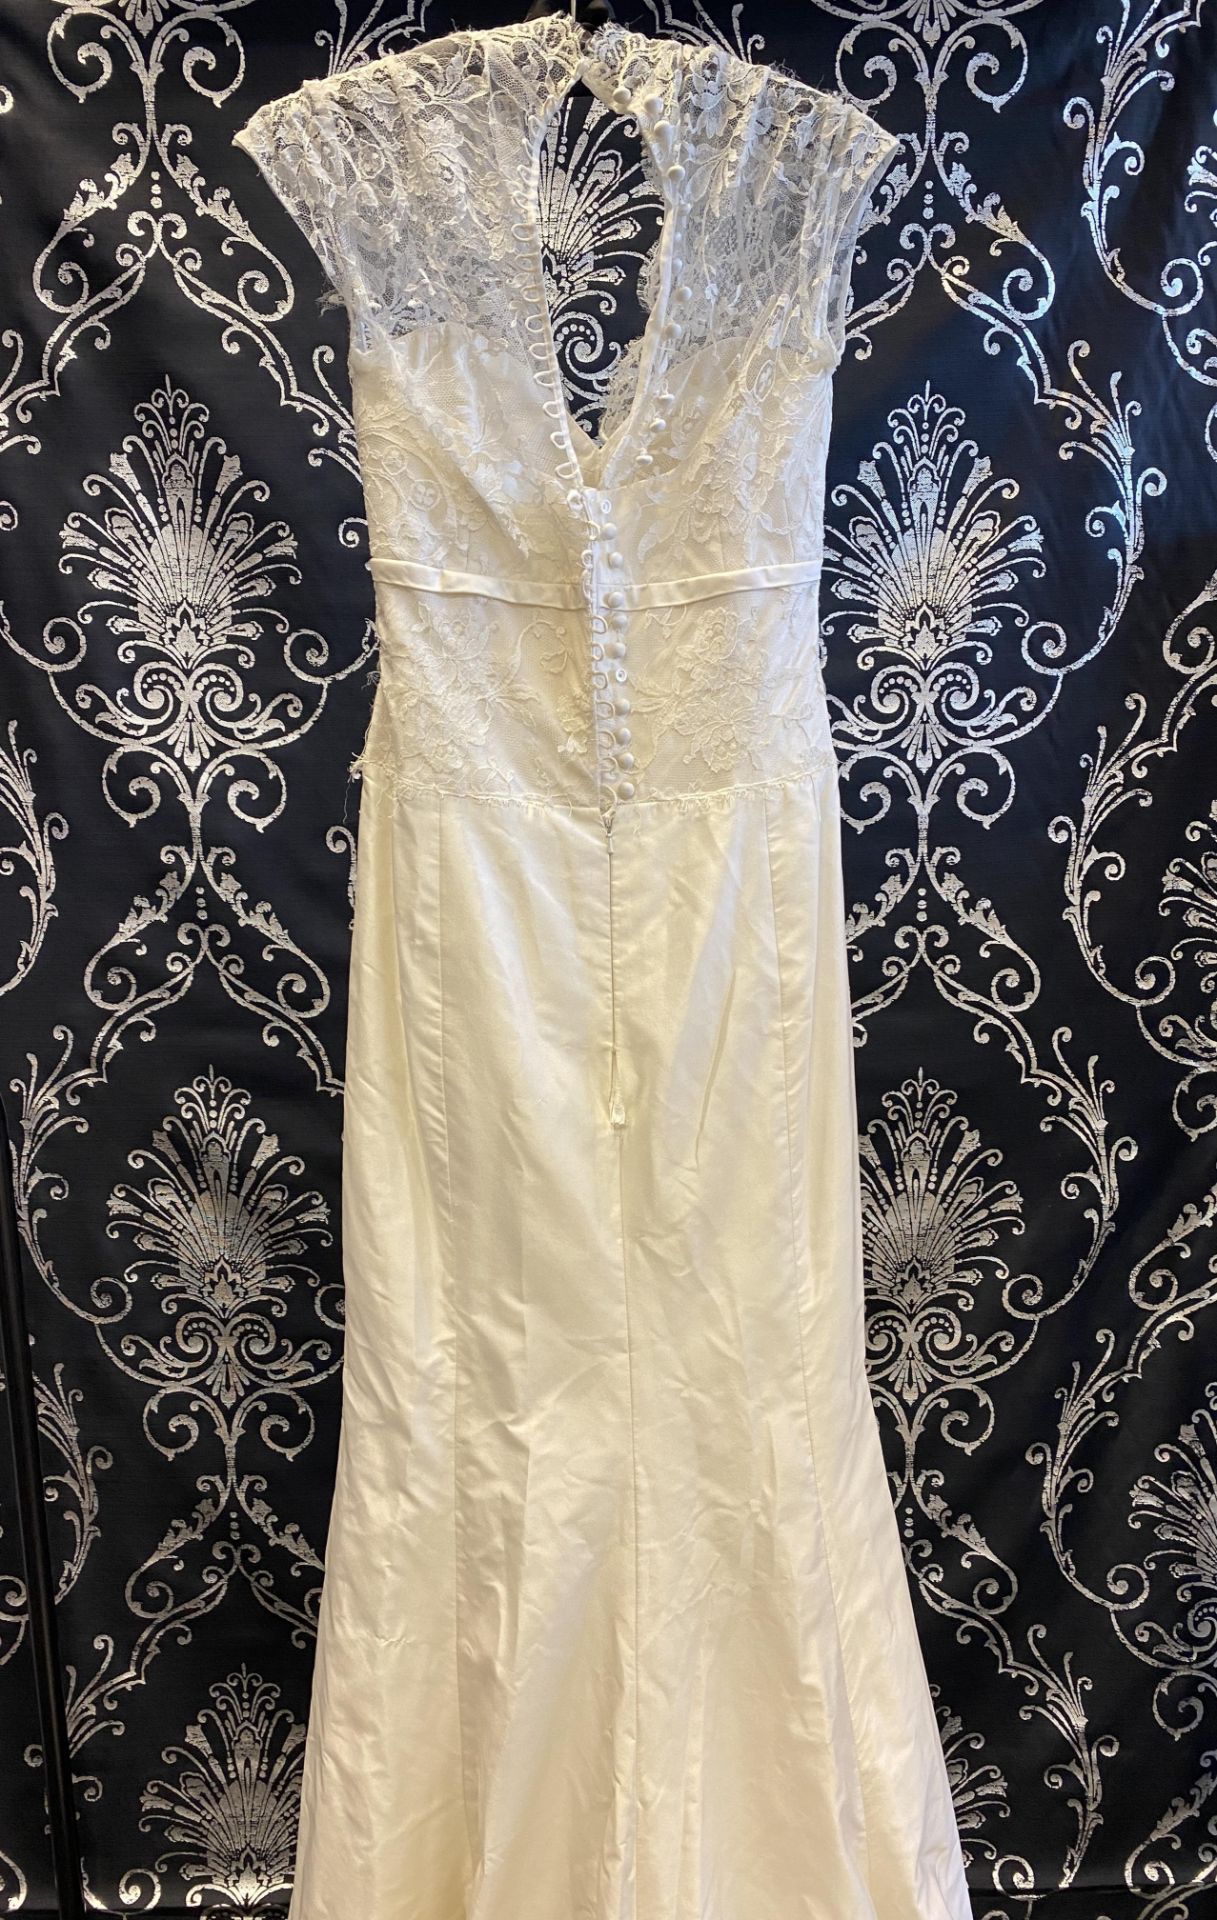 1 x ALAN HANNAH 'Estelle' Elegant Lace And Satin Fishtail Designer Wedding Dress RRP £1,200 UK 12 - Image 8 of 10